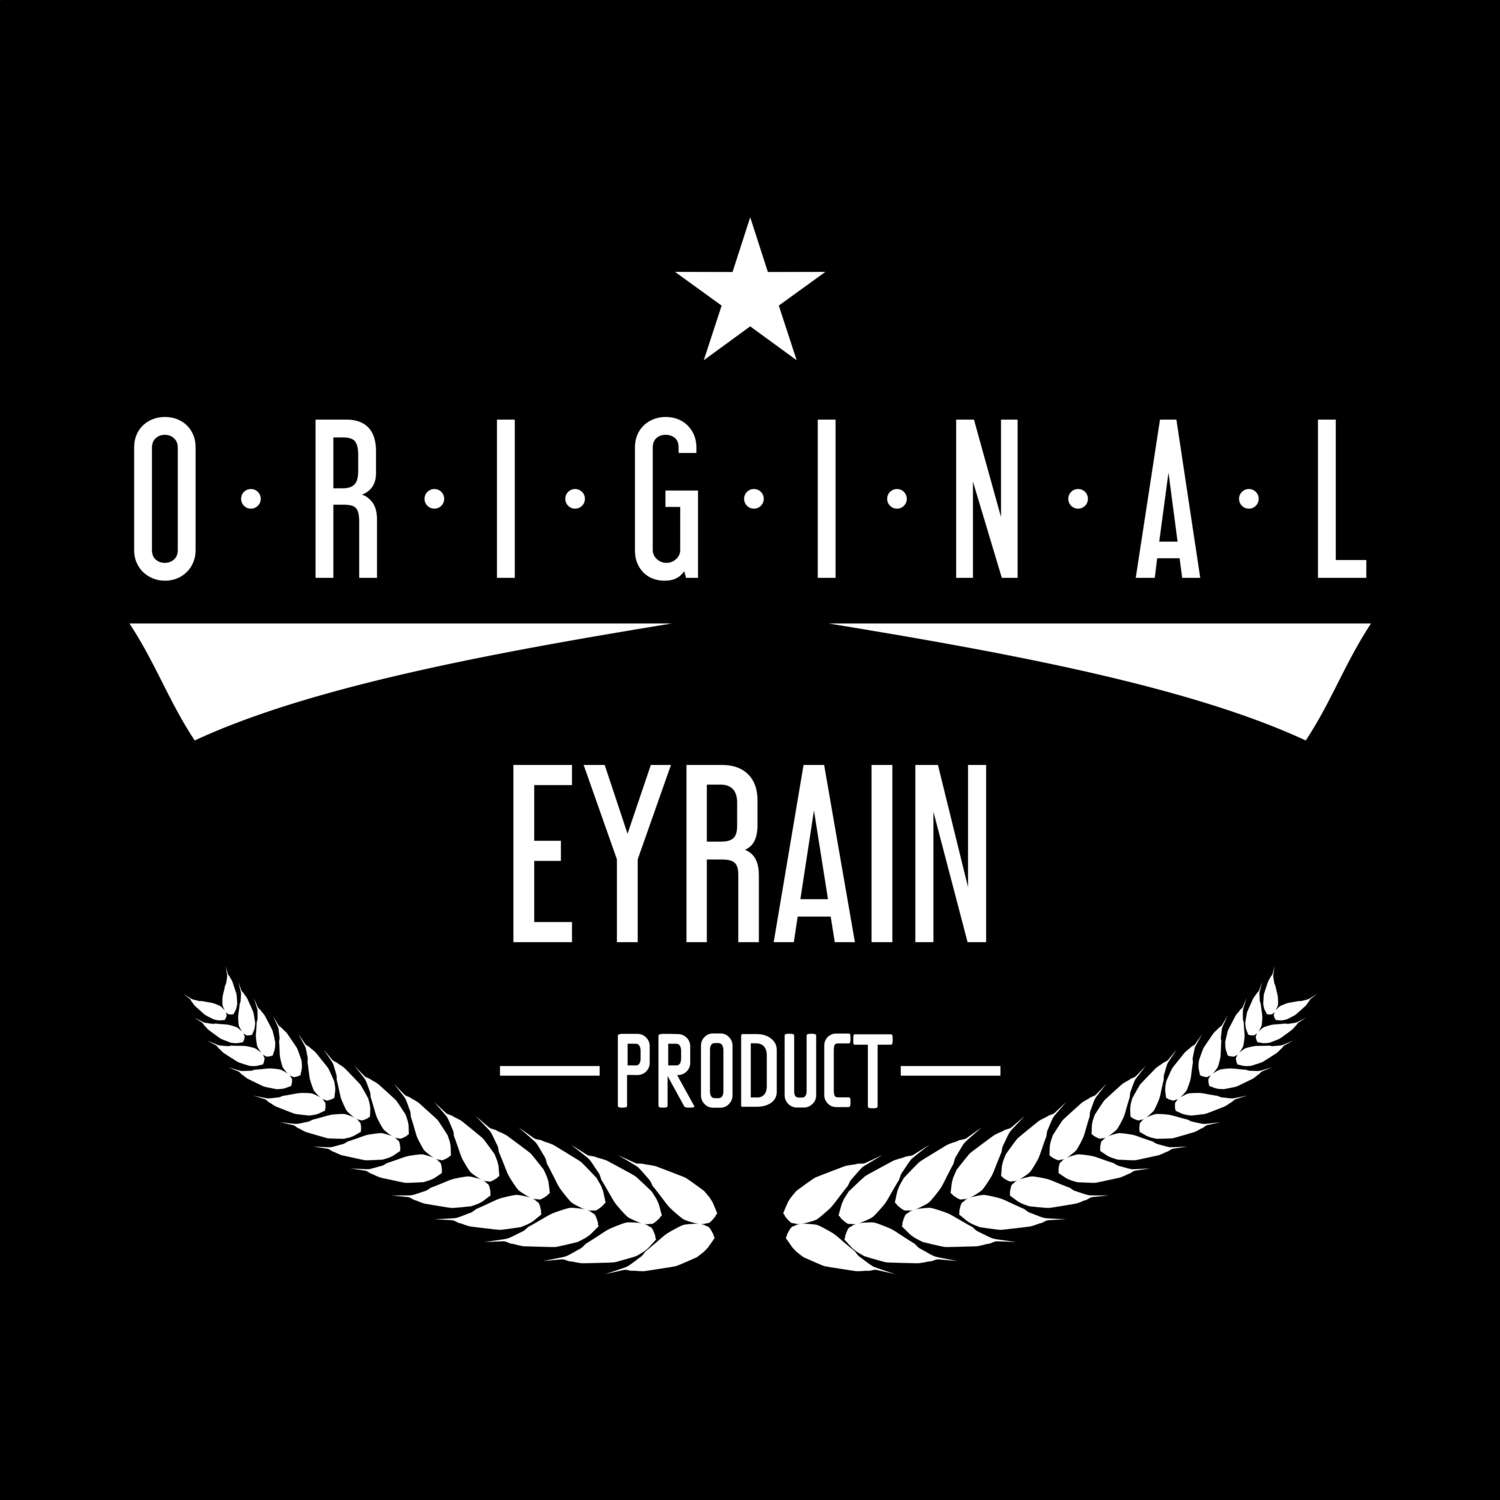 Eyrain T-Shirt »Original Product«